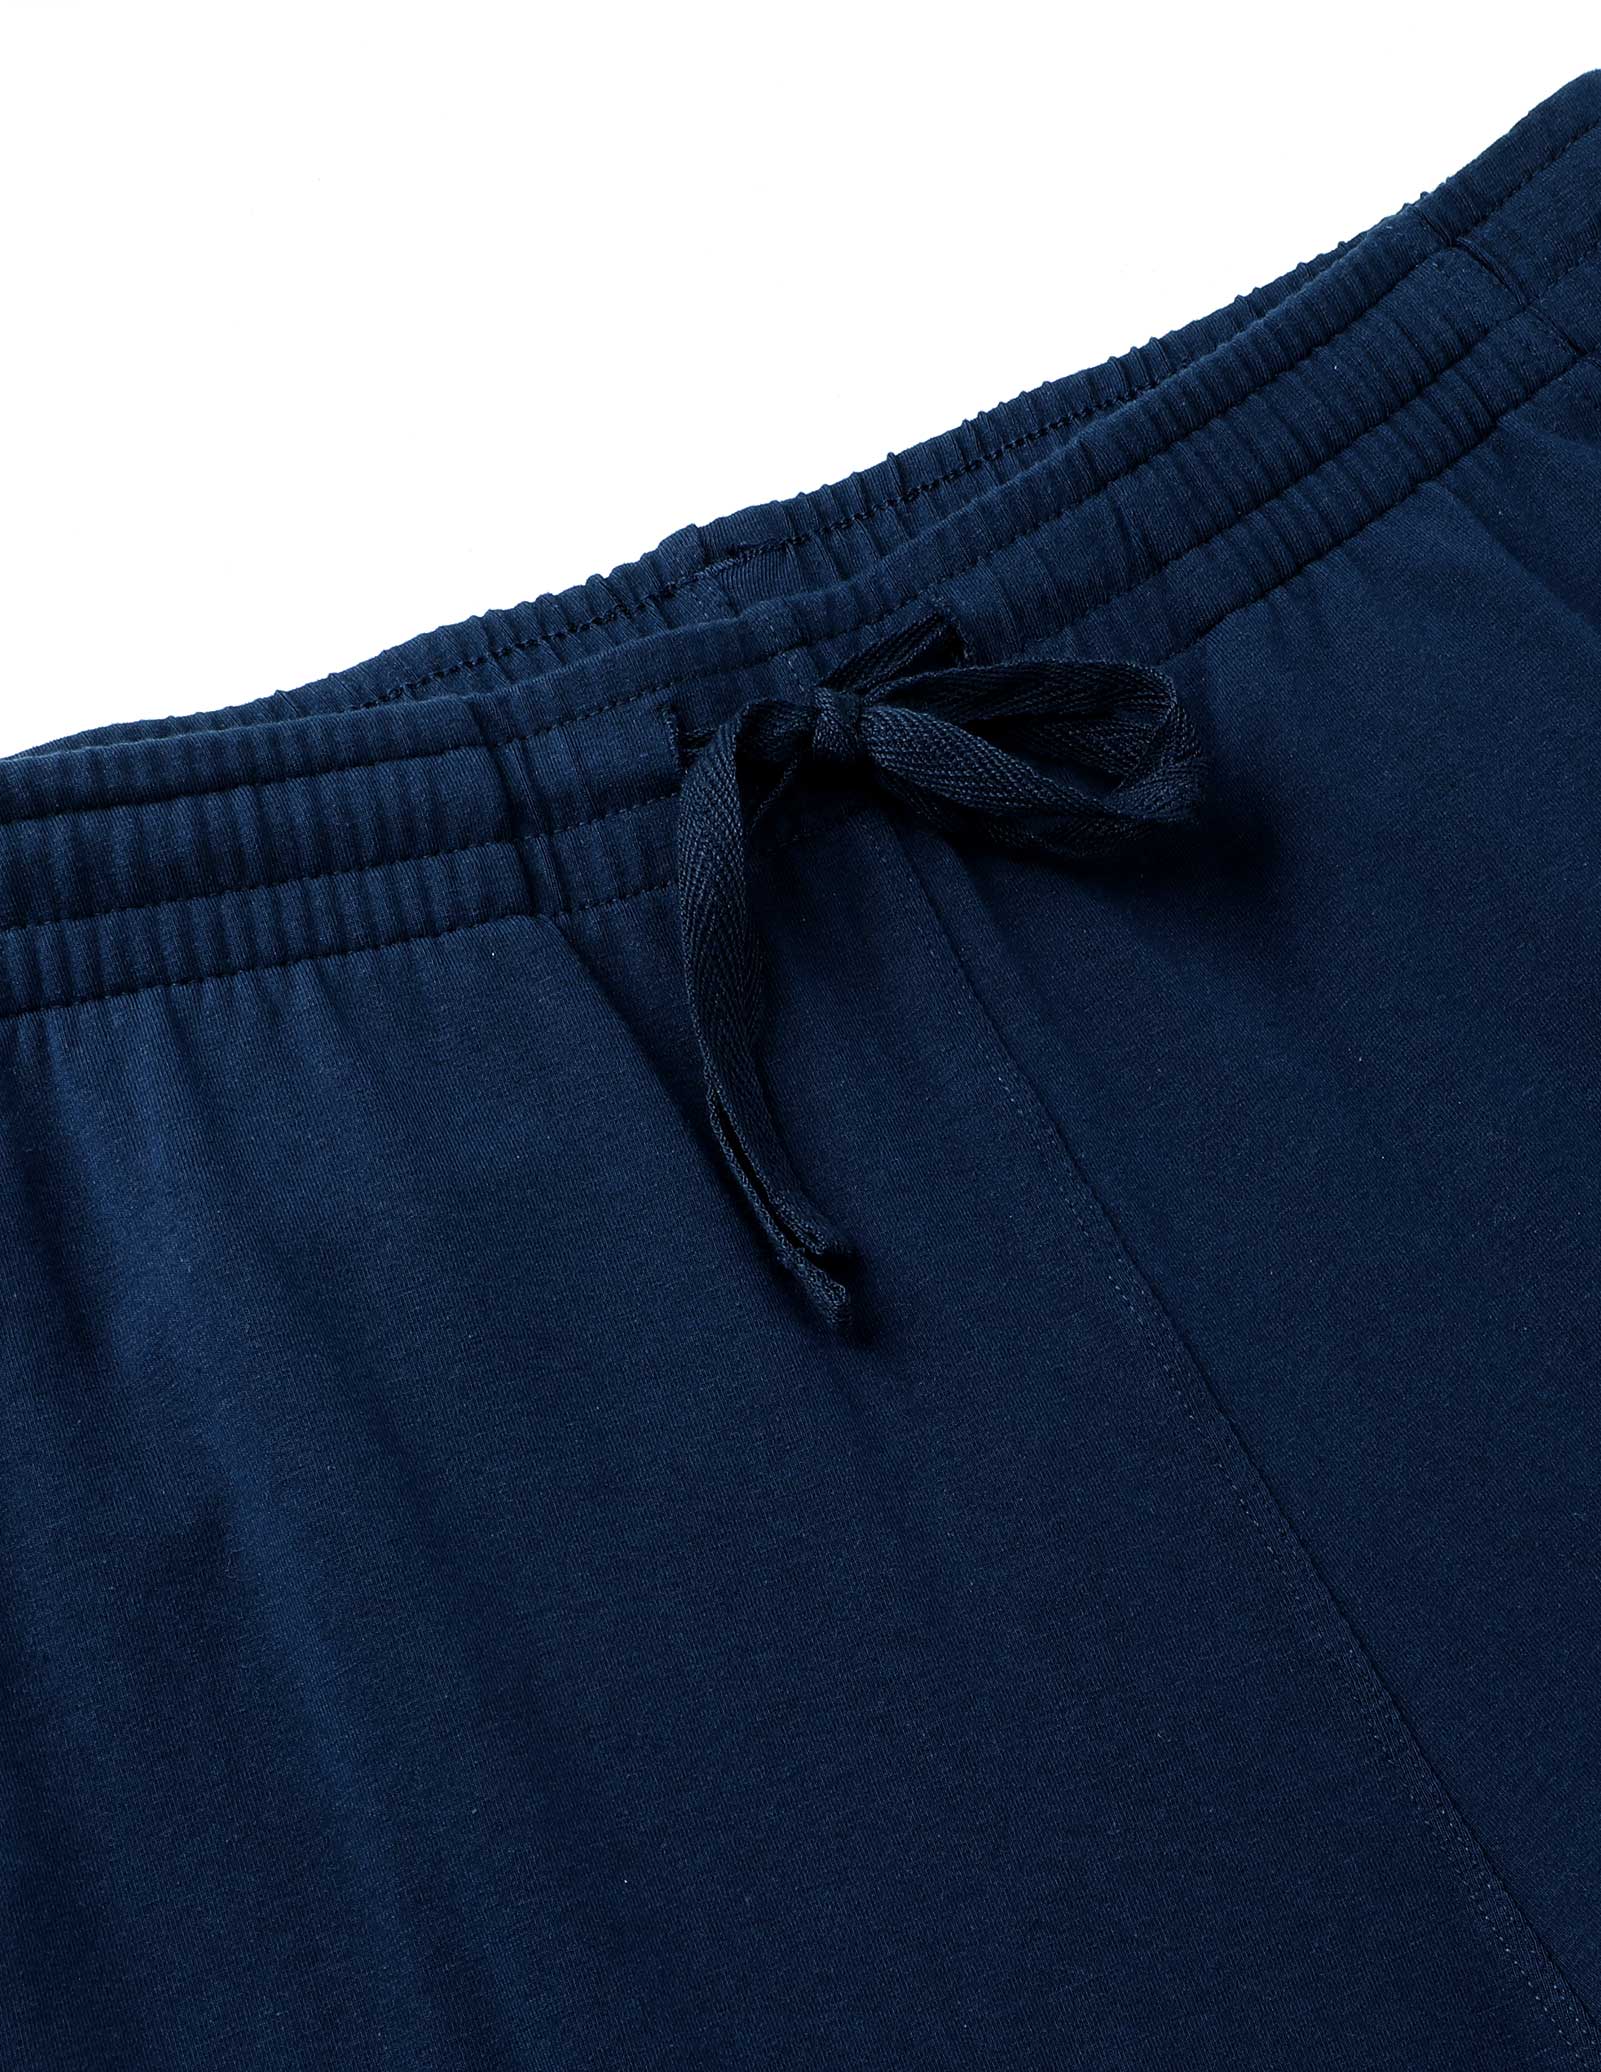 Women's Cotton Sweatpants Casual Drawstring Pants